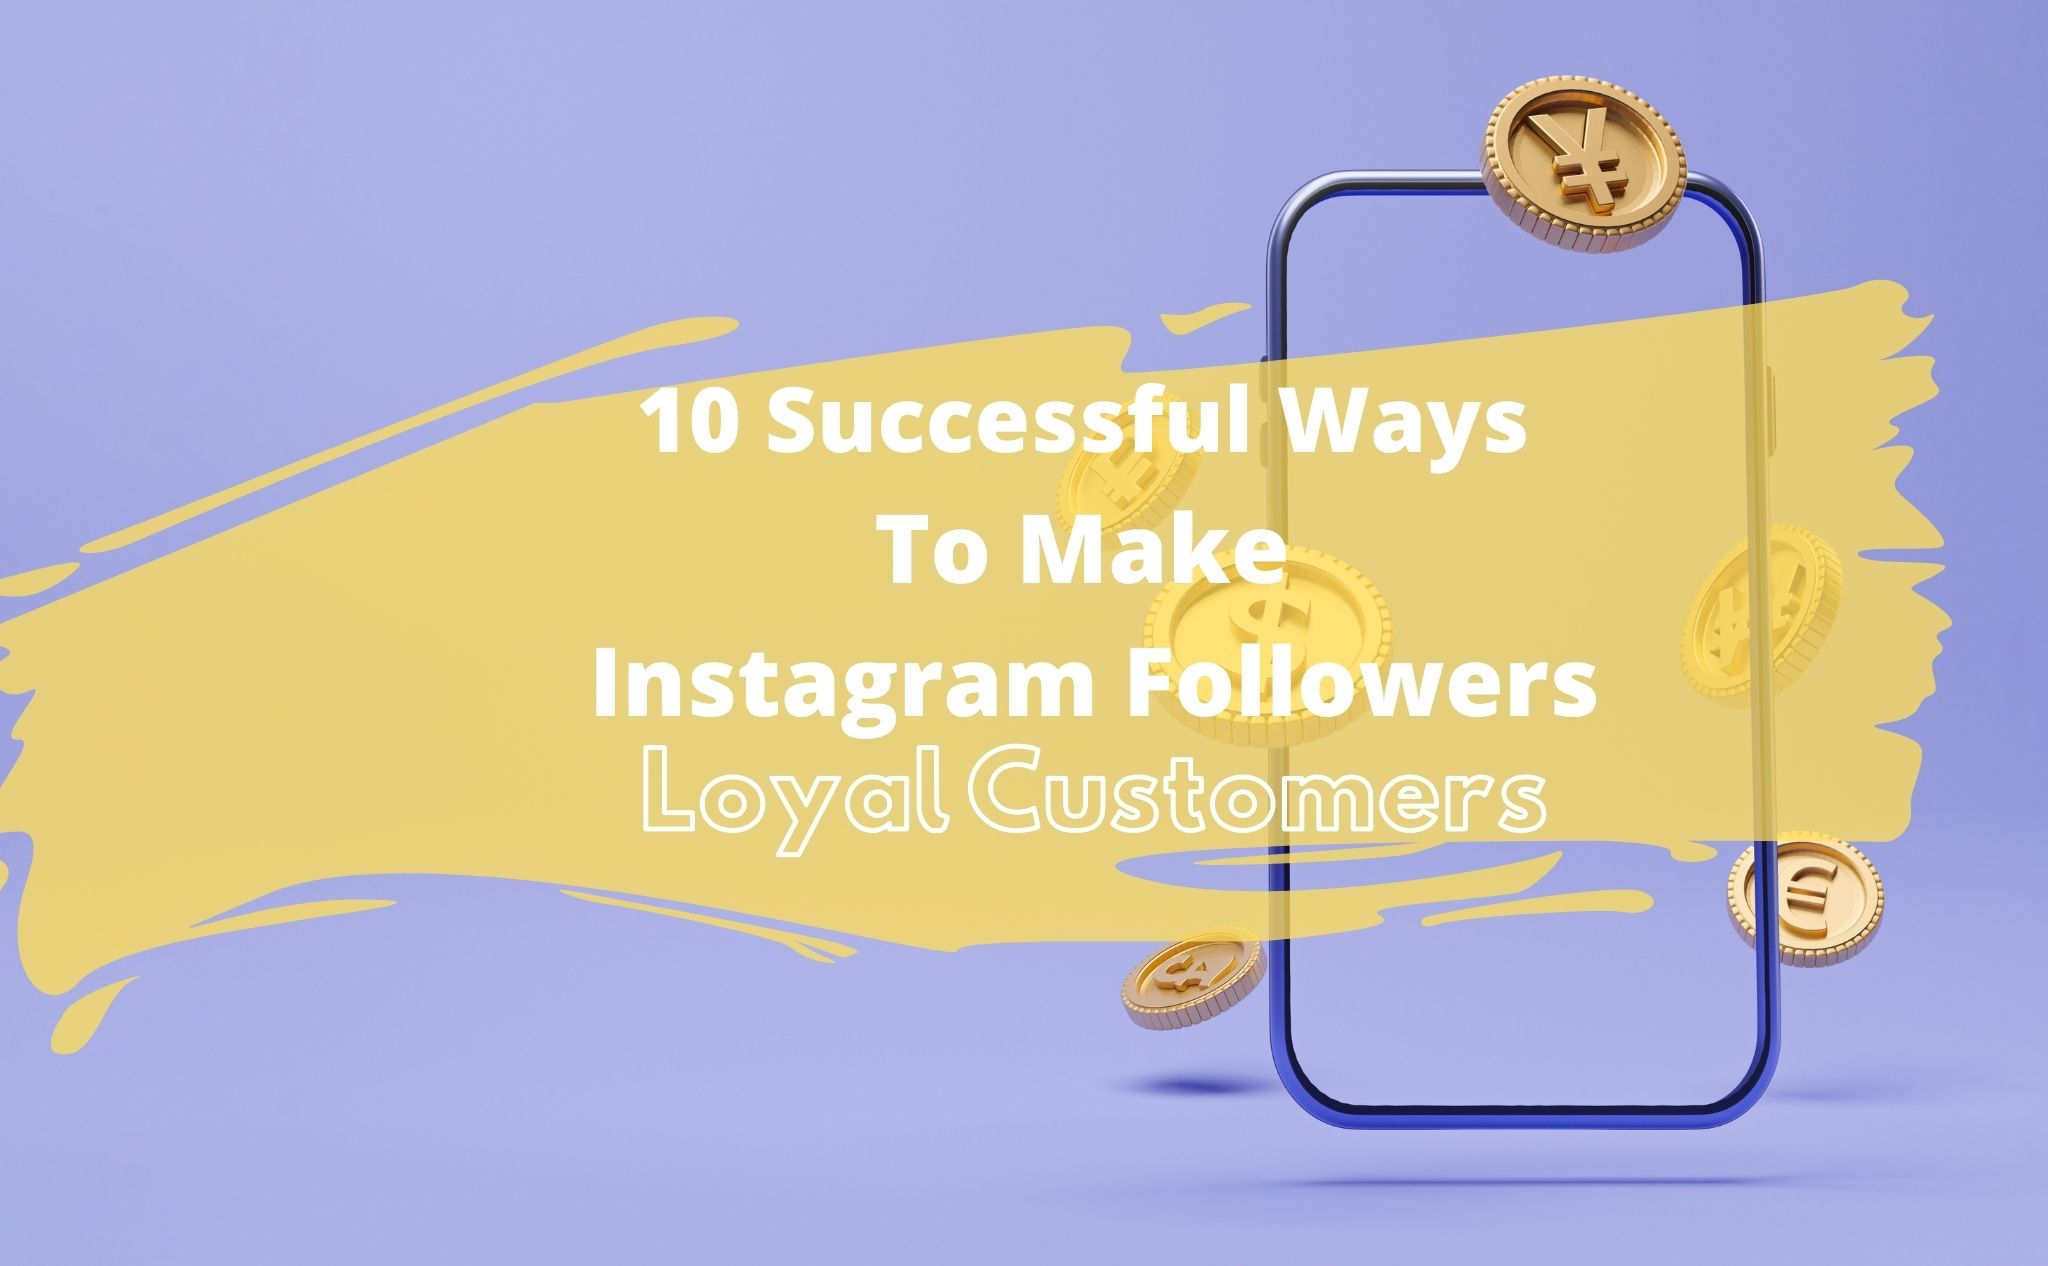 10 Successful Ways To Make Instagram Followers Loyal Customers